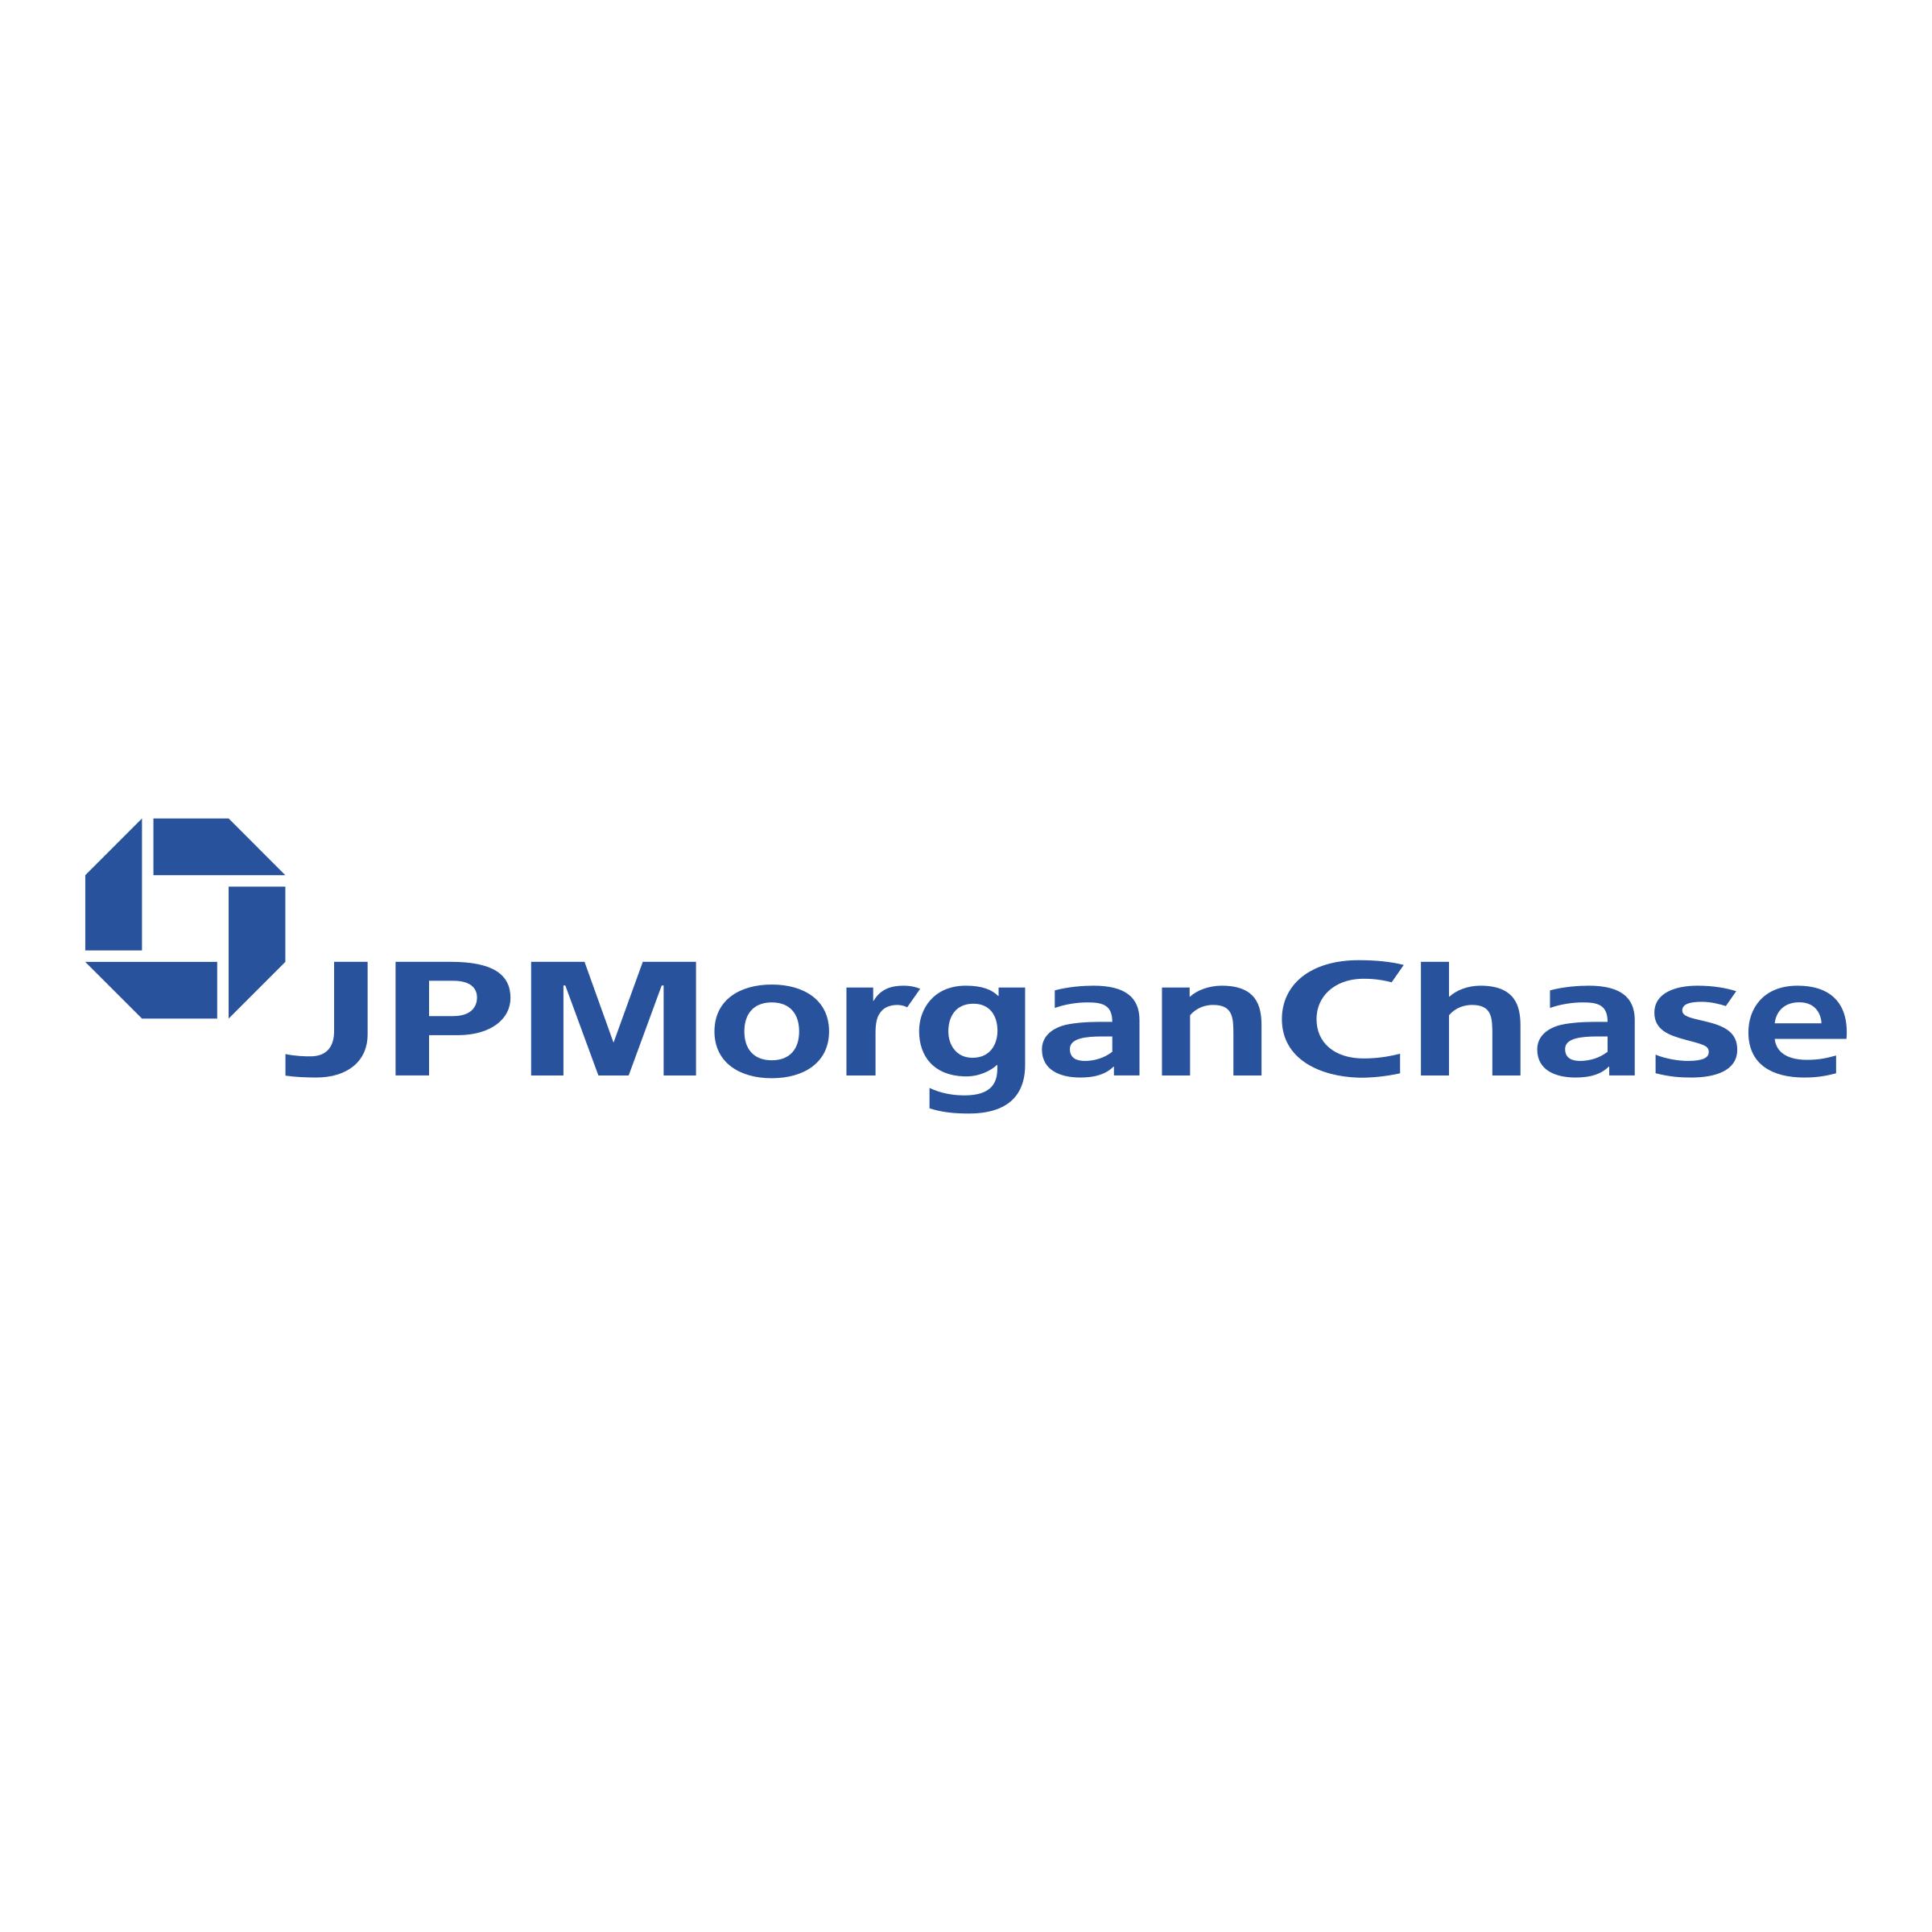 JPMorgan Chase Logo - JPMorgan Chase Logo PNG Transparent & SVG Vector - Freebie Supply